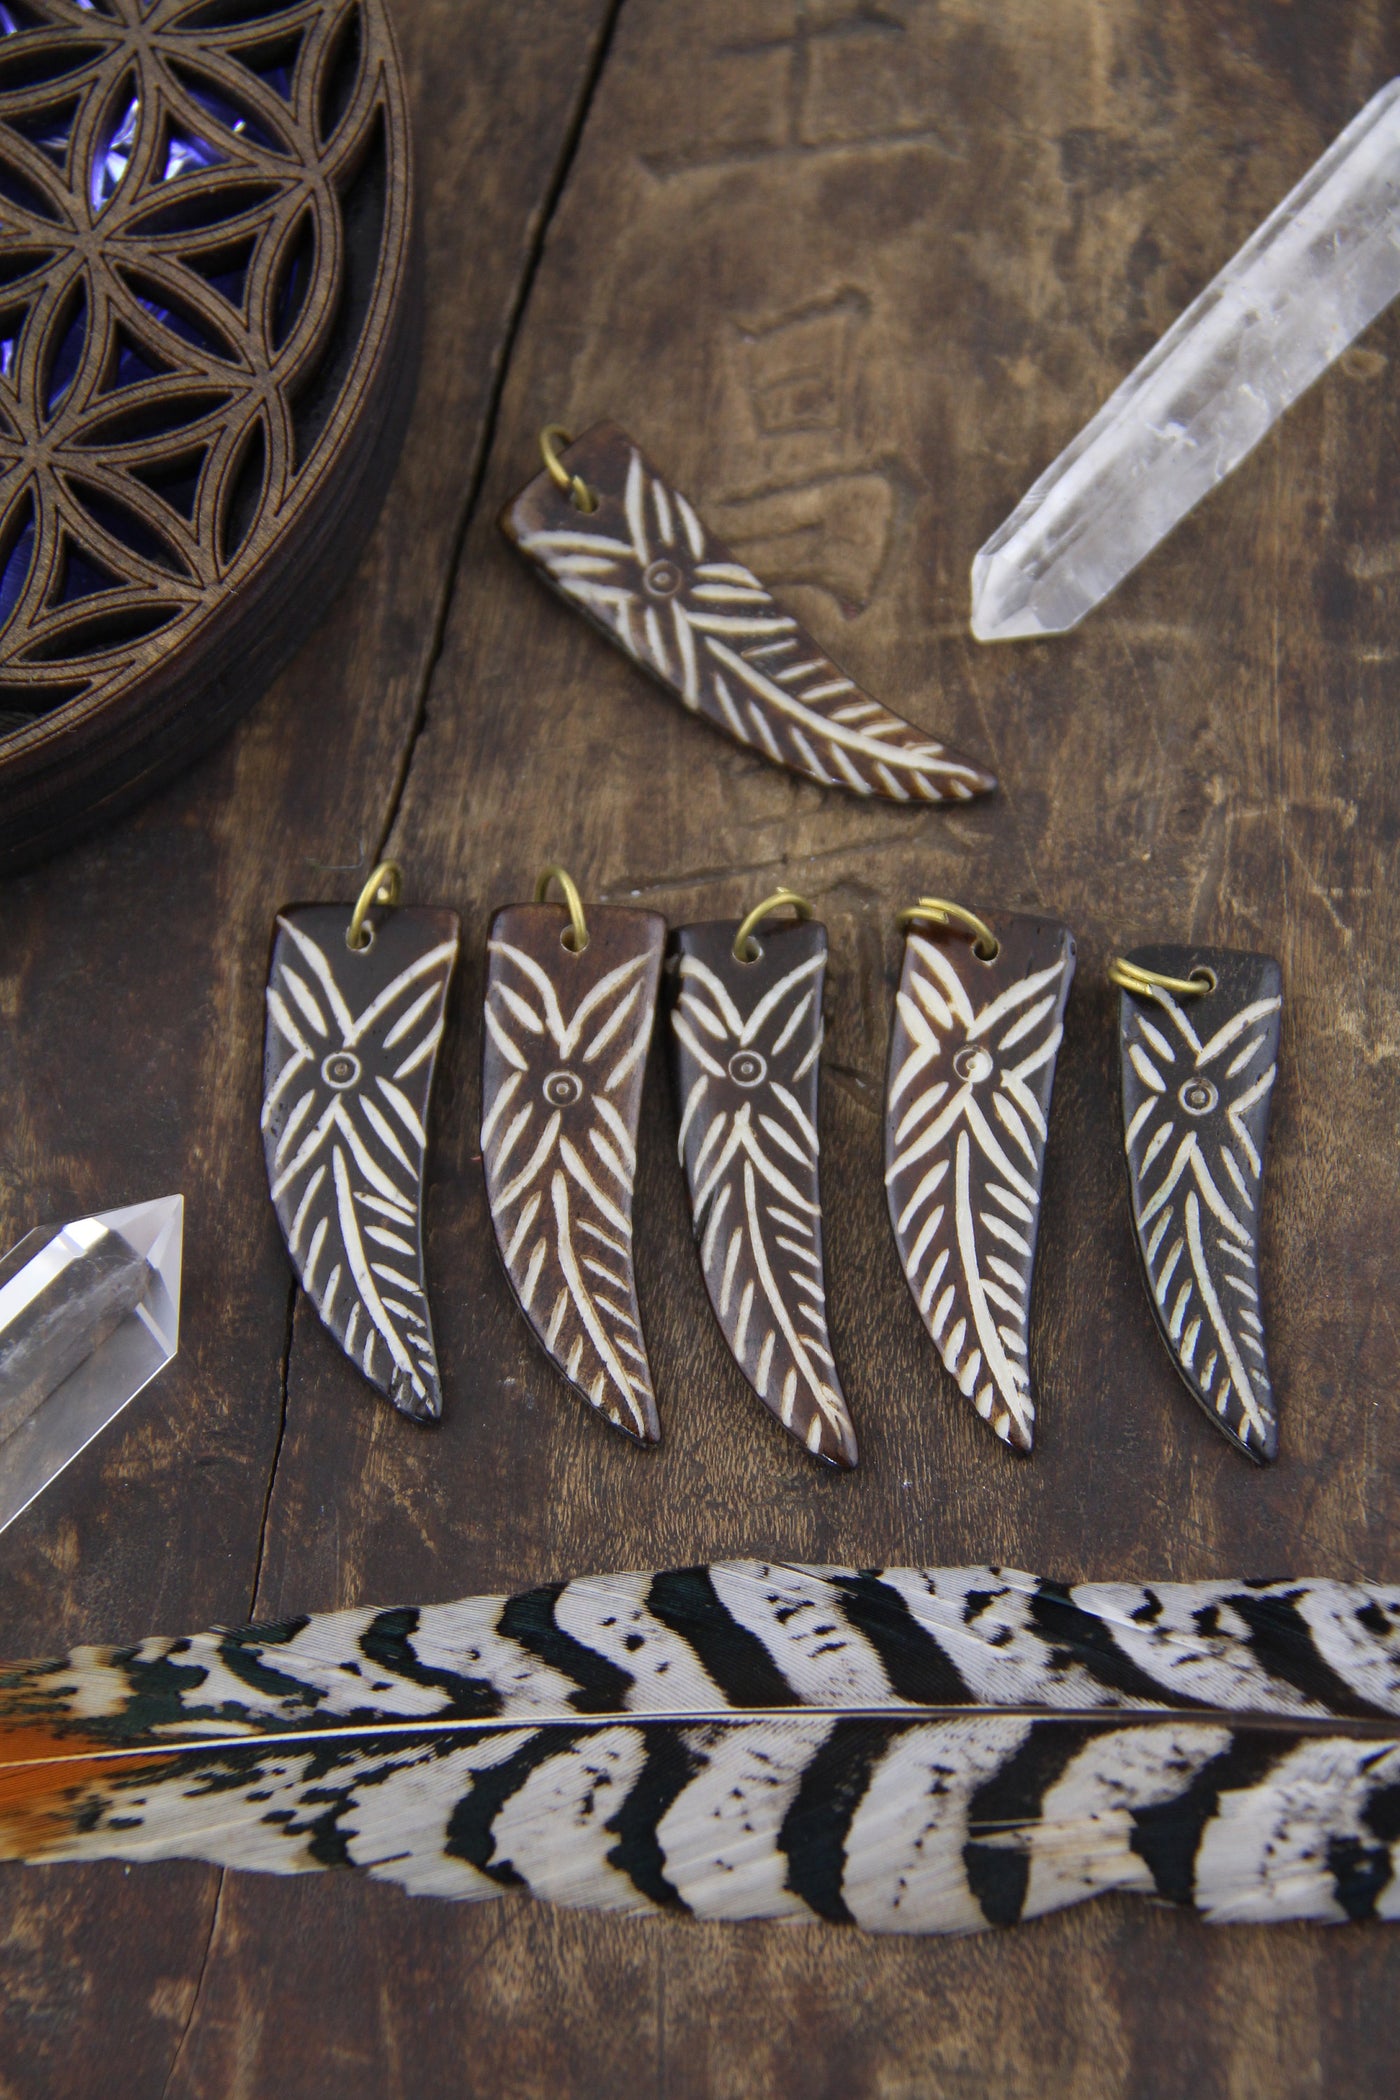 Tribal Flower Dagger Pendant: 2" Brown/ White Bohemian Jewelry Making Supplies, Handmade Beads